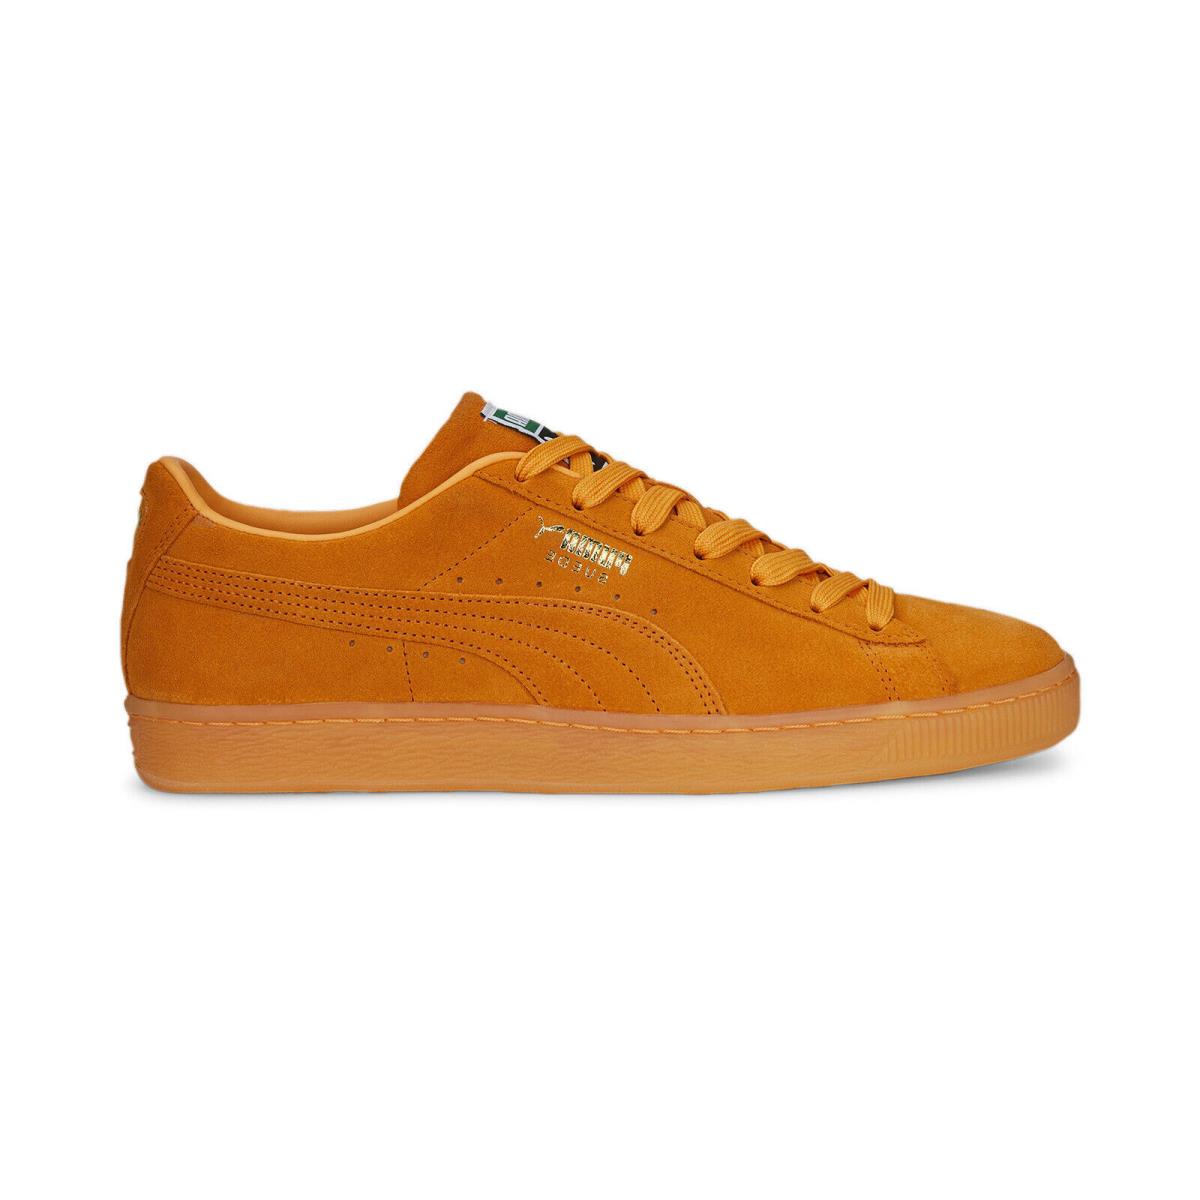 Puma Suede Classic Xxi 37491572 Mens Orange Suede Lifestyle Sneakers Shoes - Orange